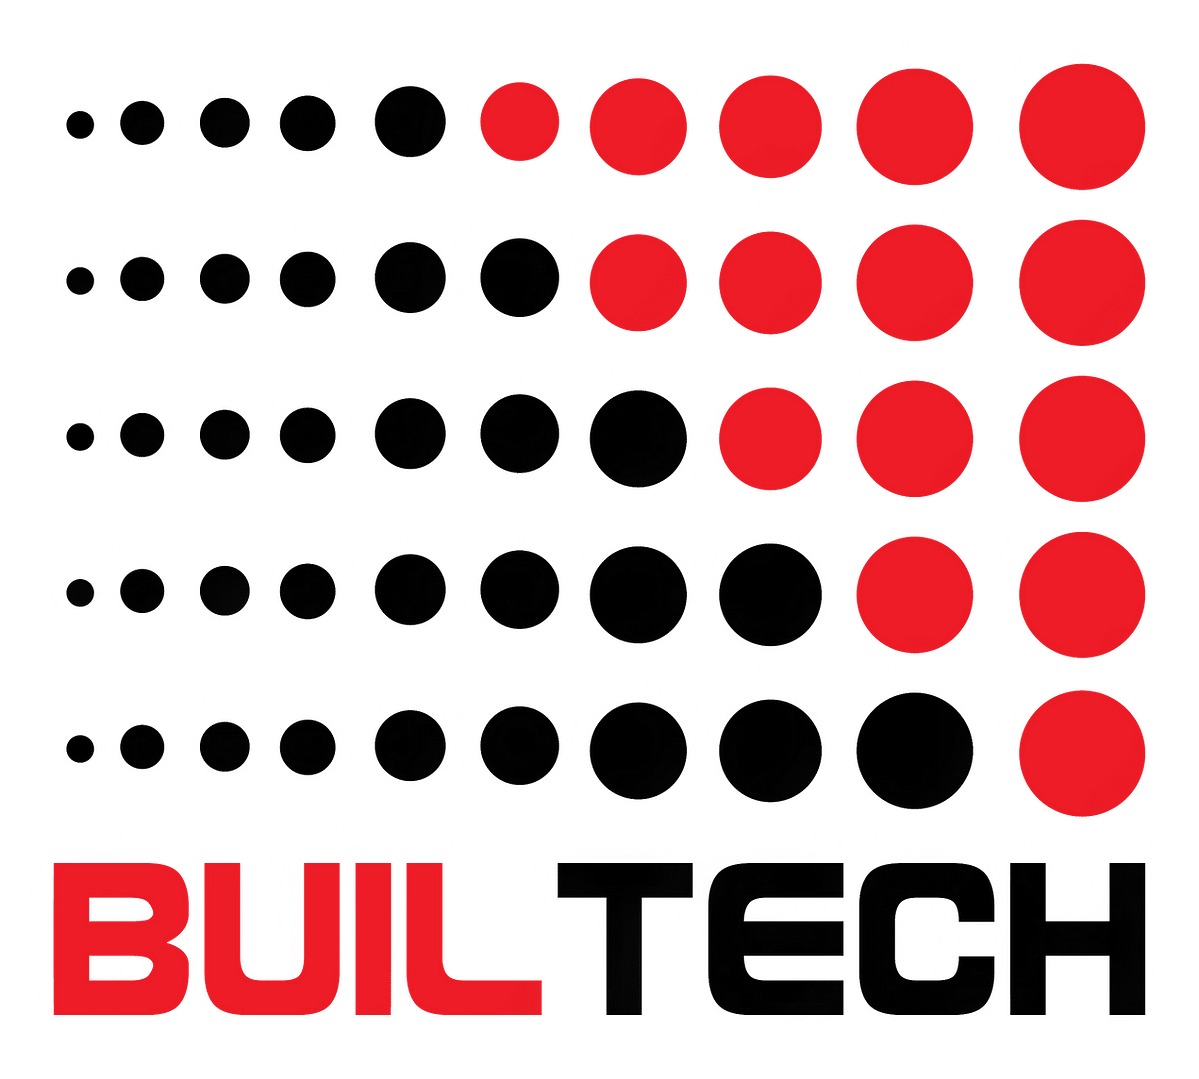 Builtech Trading LLC